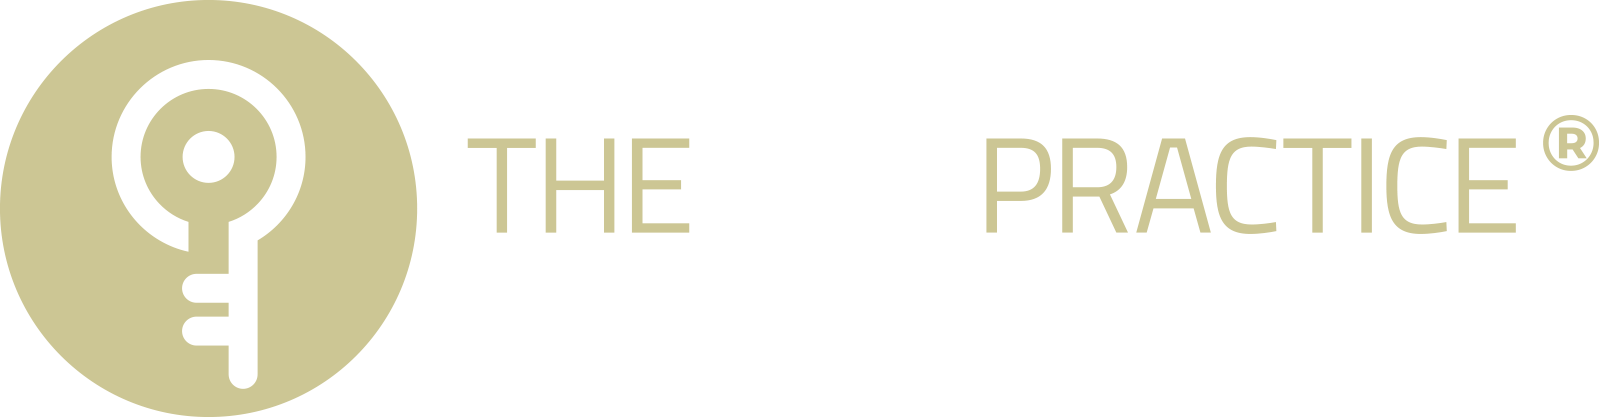 The HR Practice